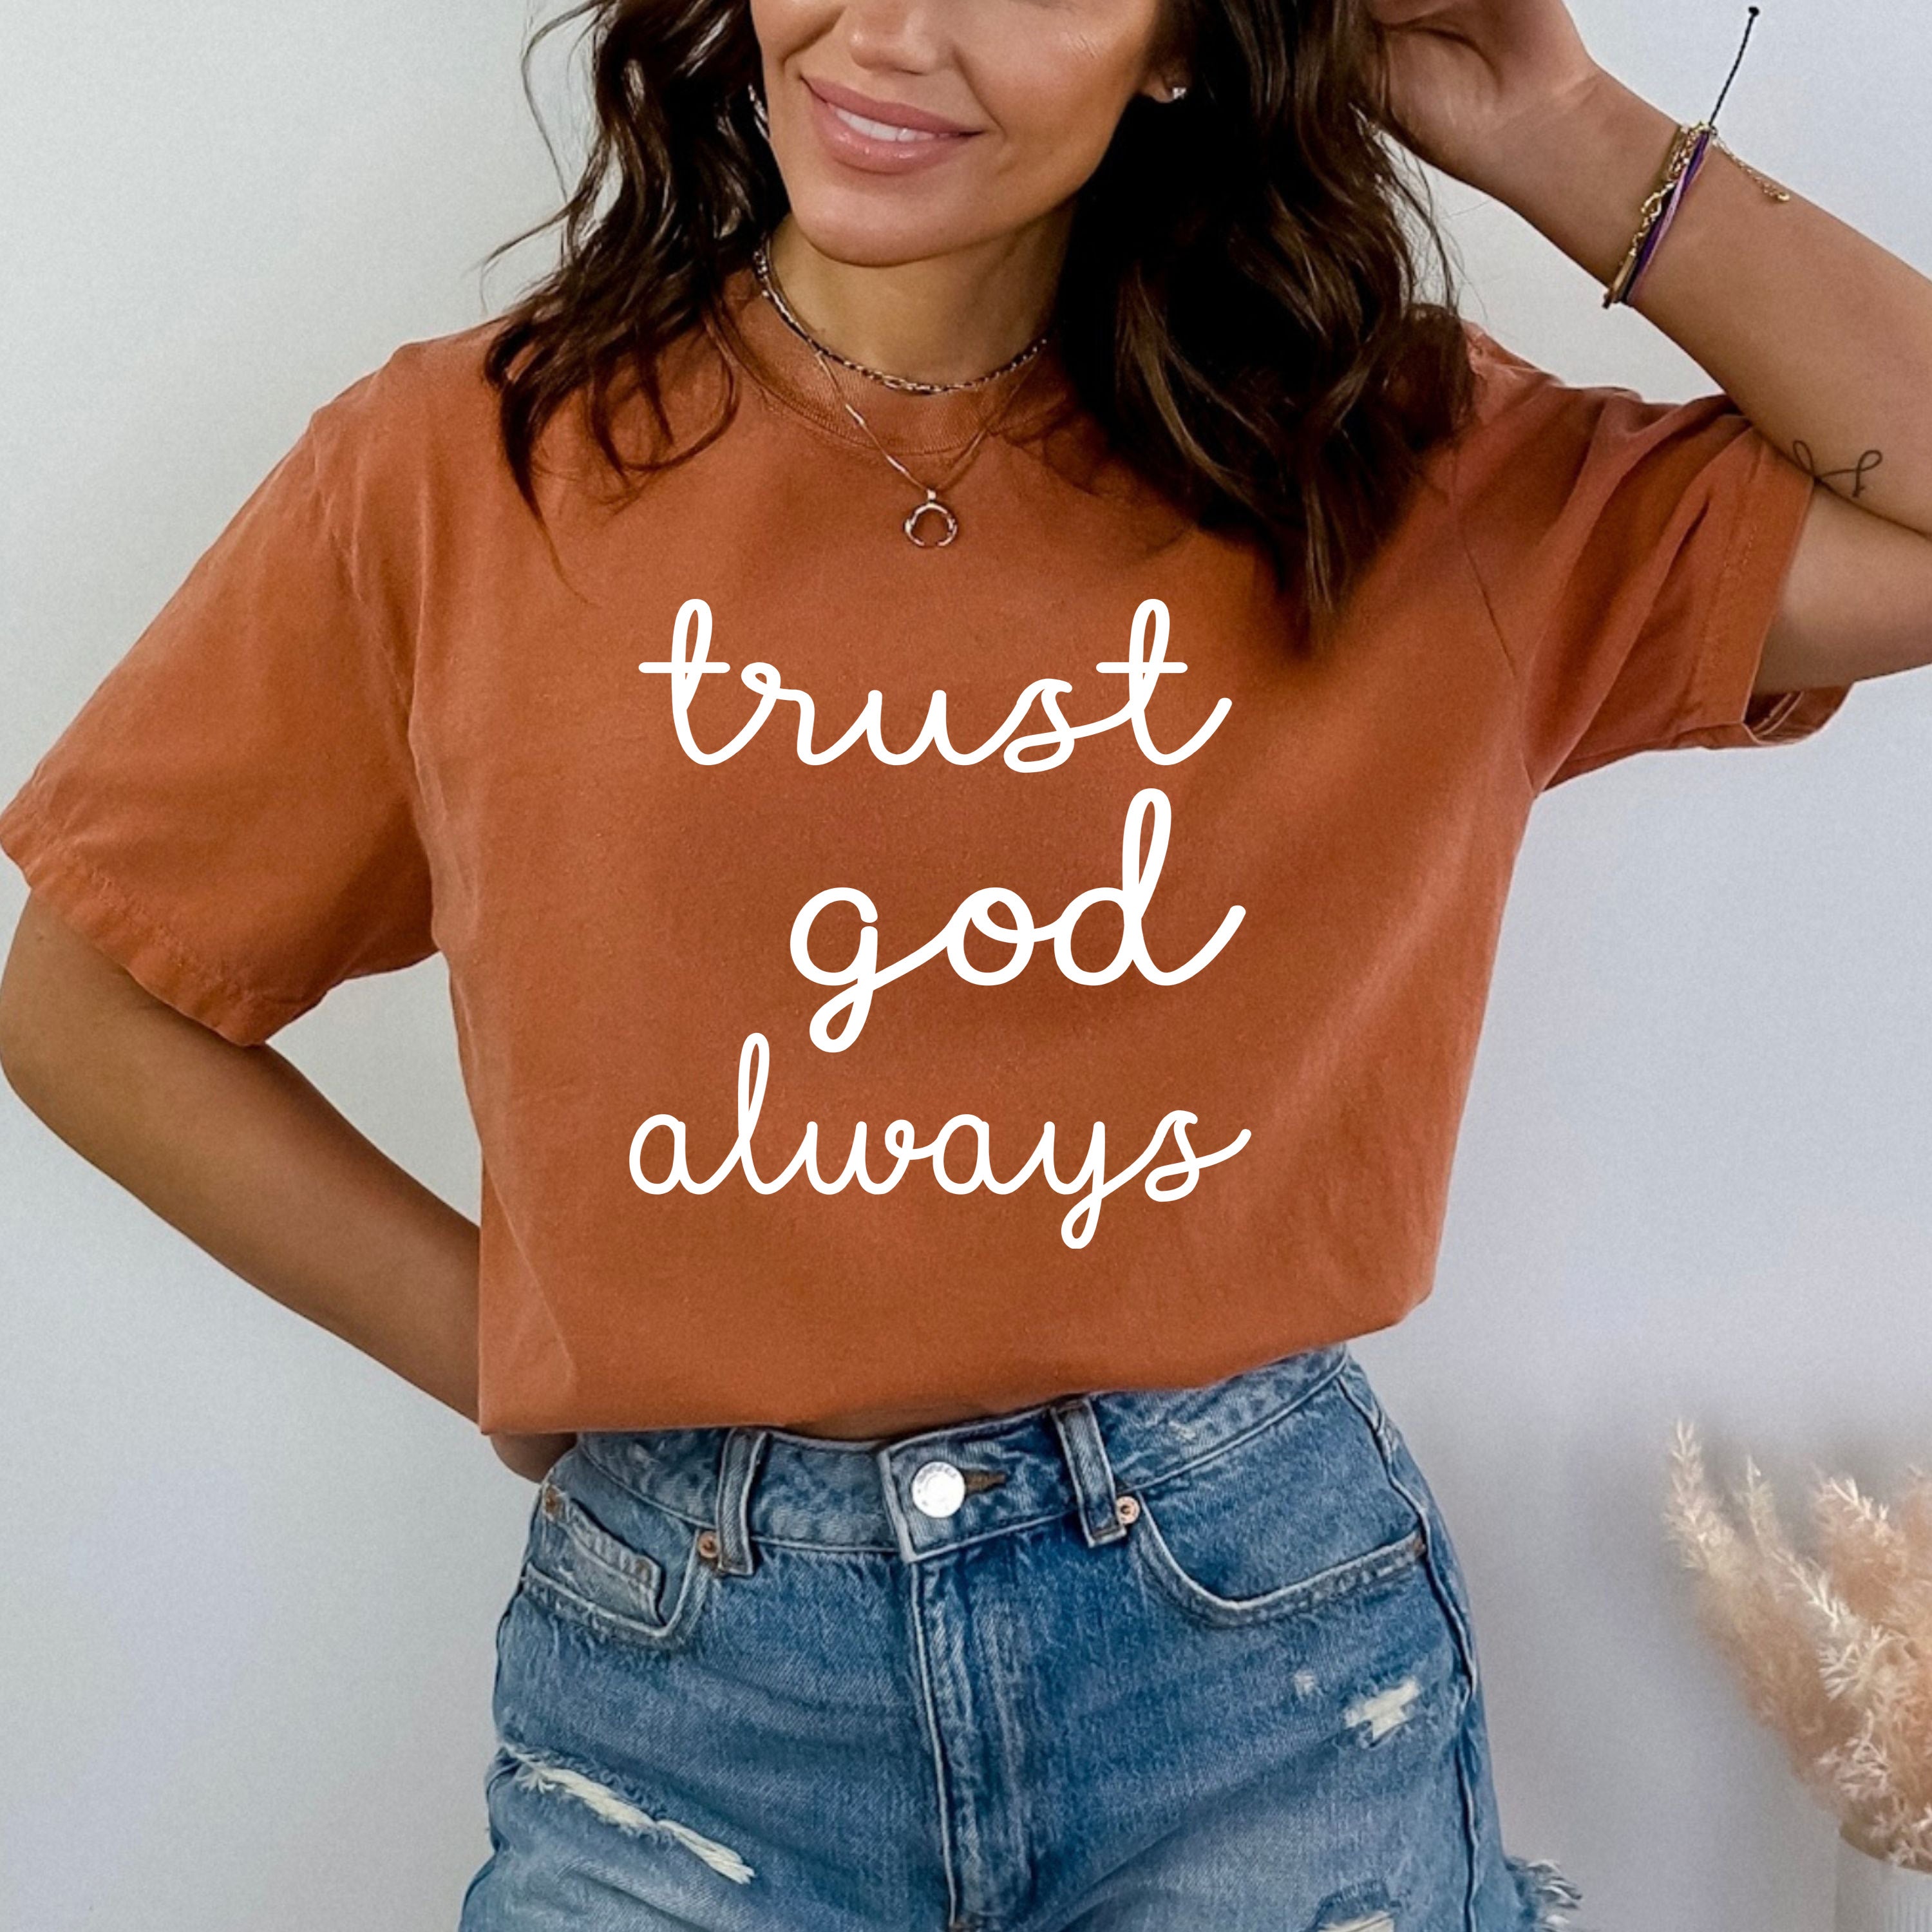 "Trust God Always" - Bella Canvas T-Shirt